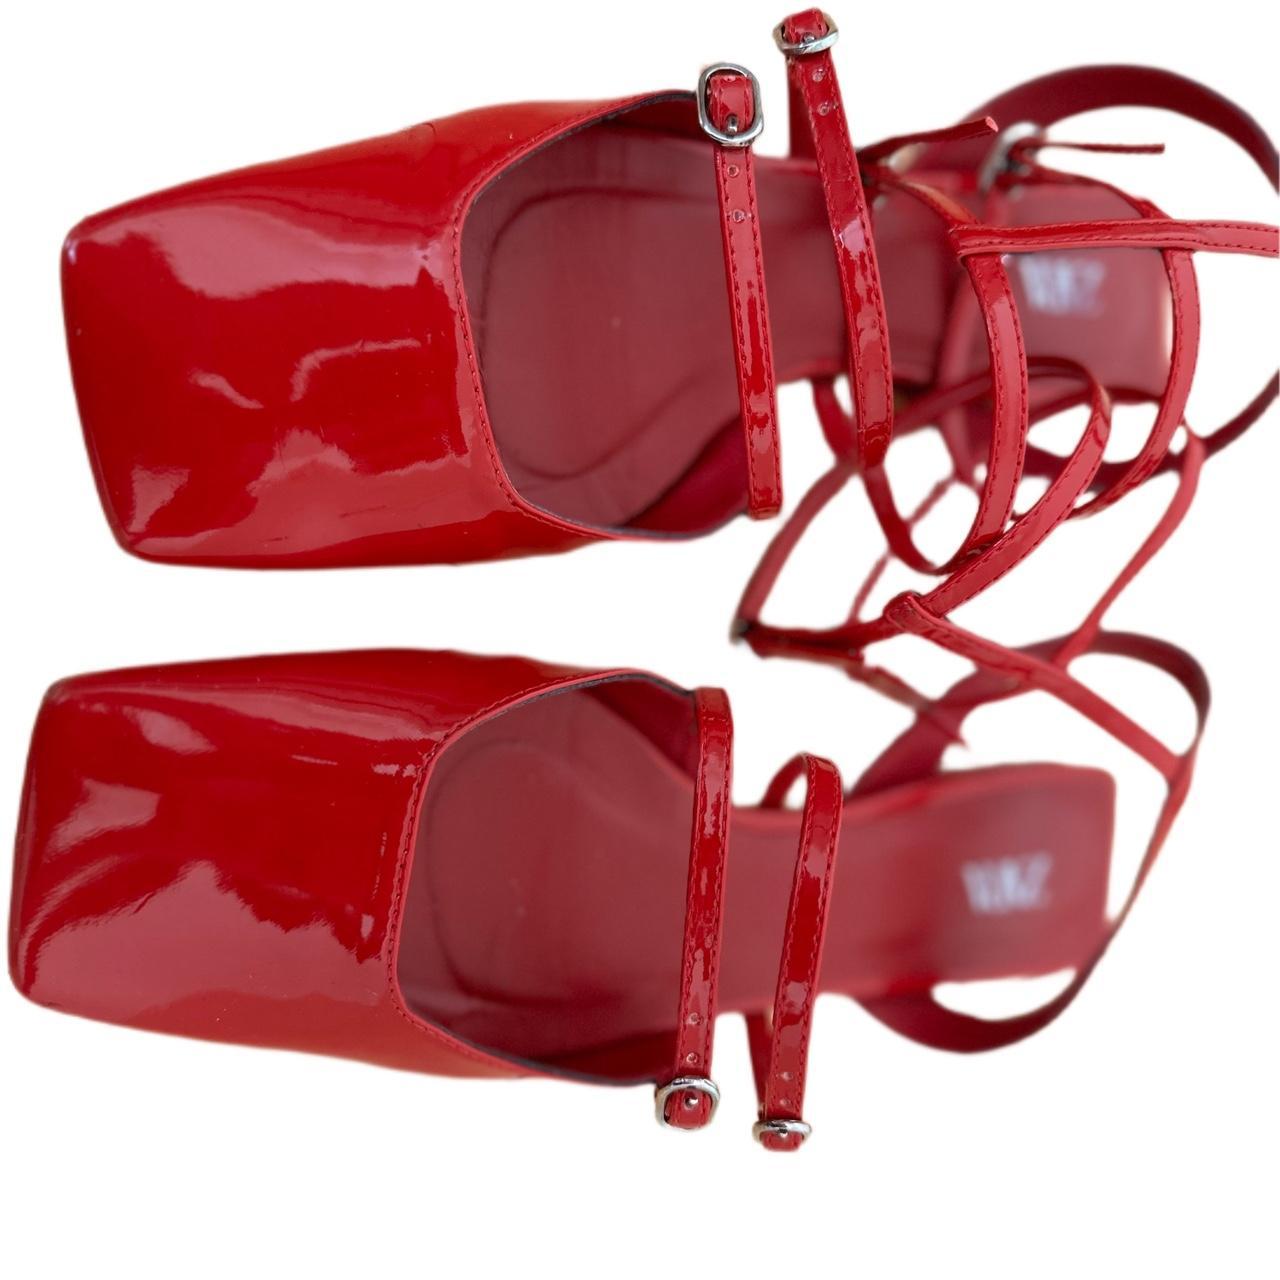 Zara red faux patent leather sling back red ballet... - Depop